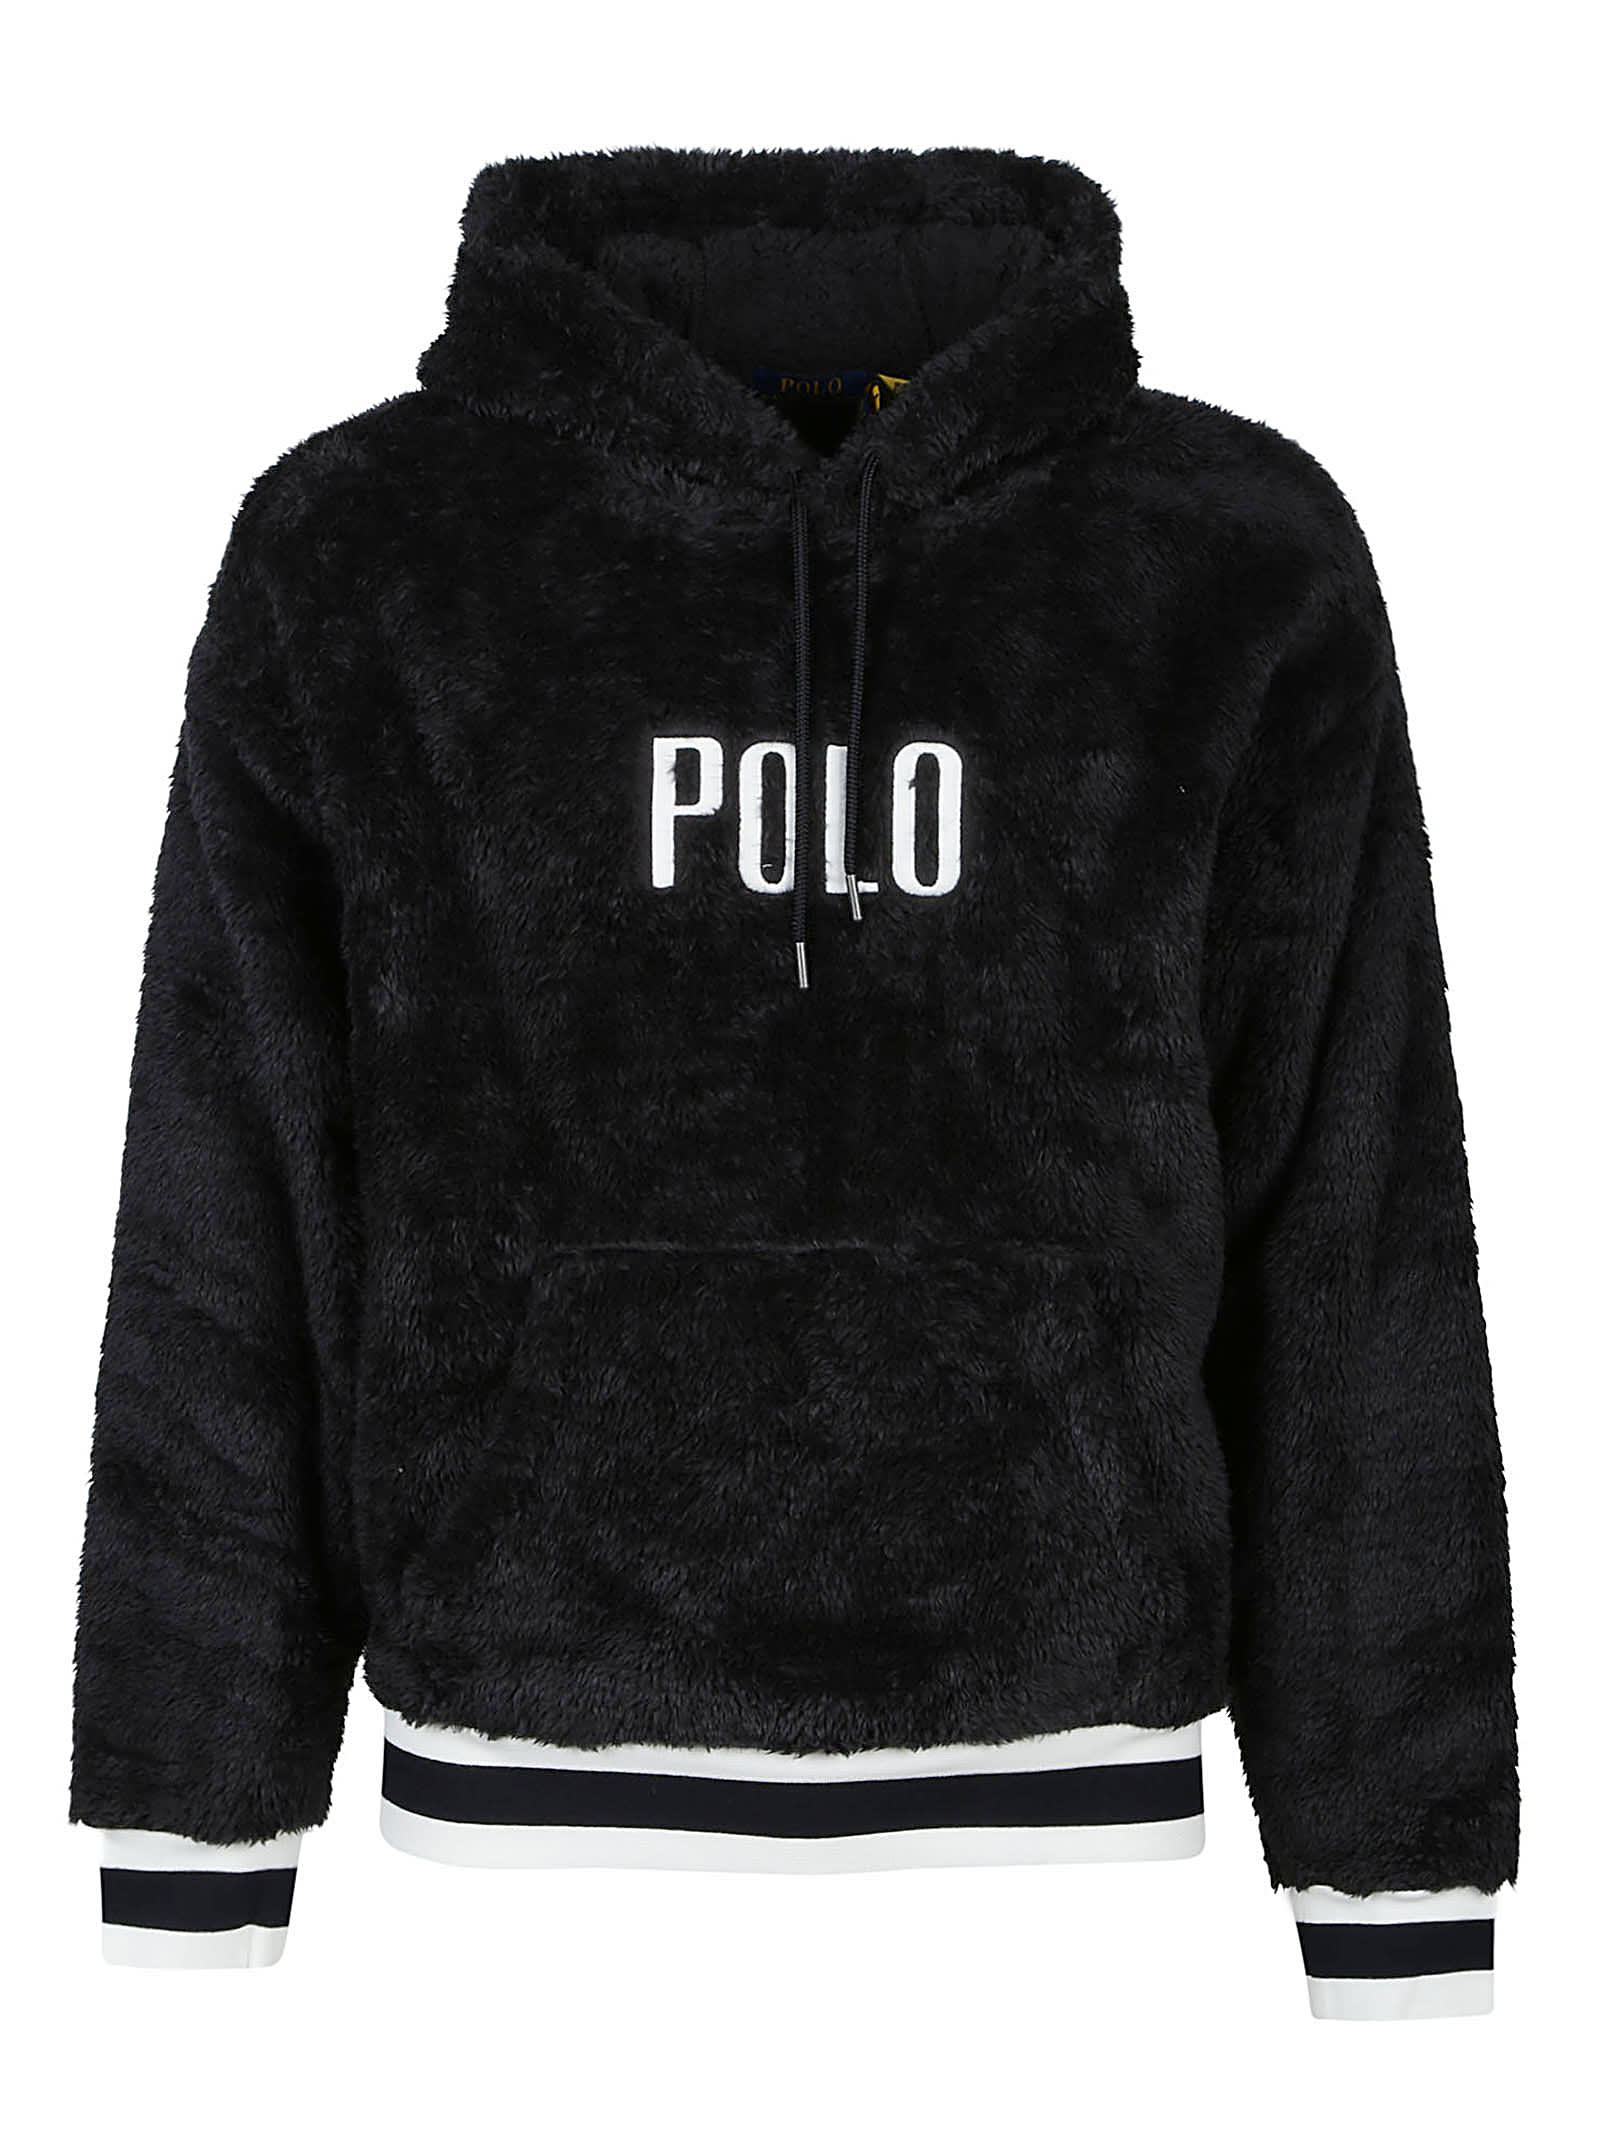 Polo Ralph Lauren Long Sleeve Sweatshirt In Polo Black